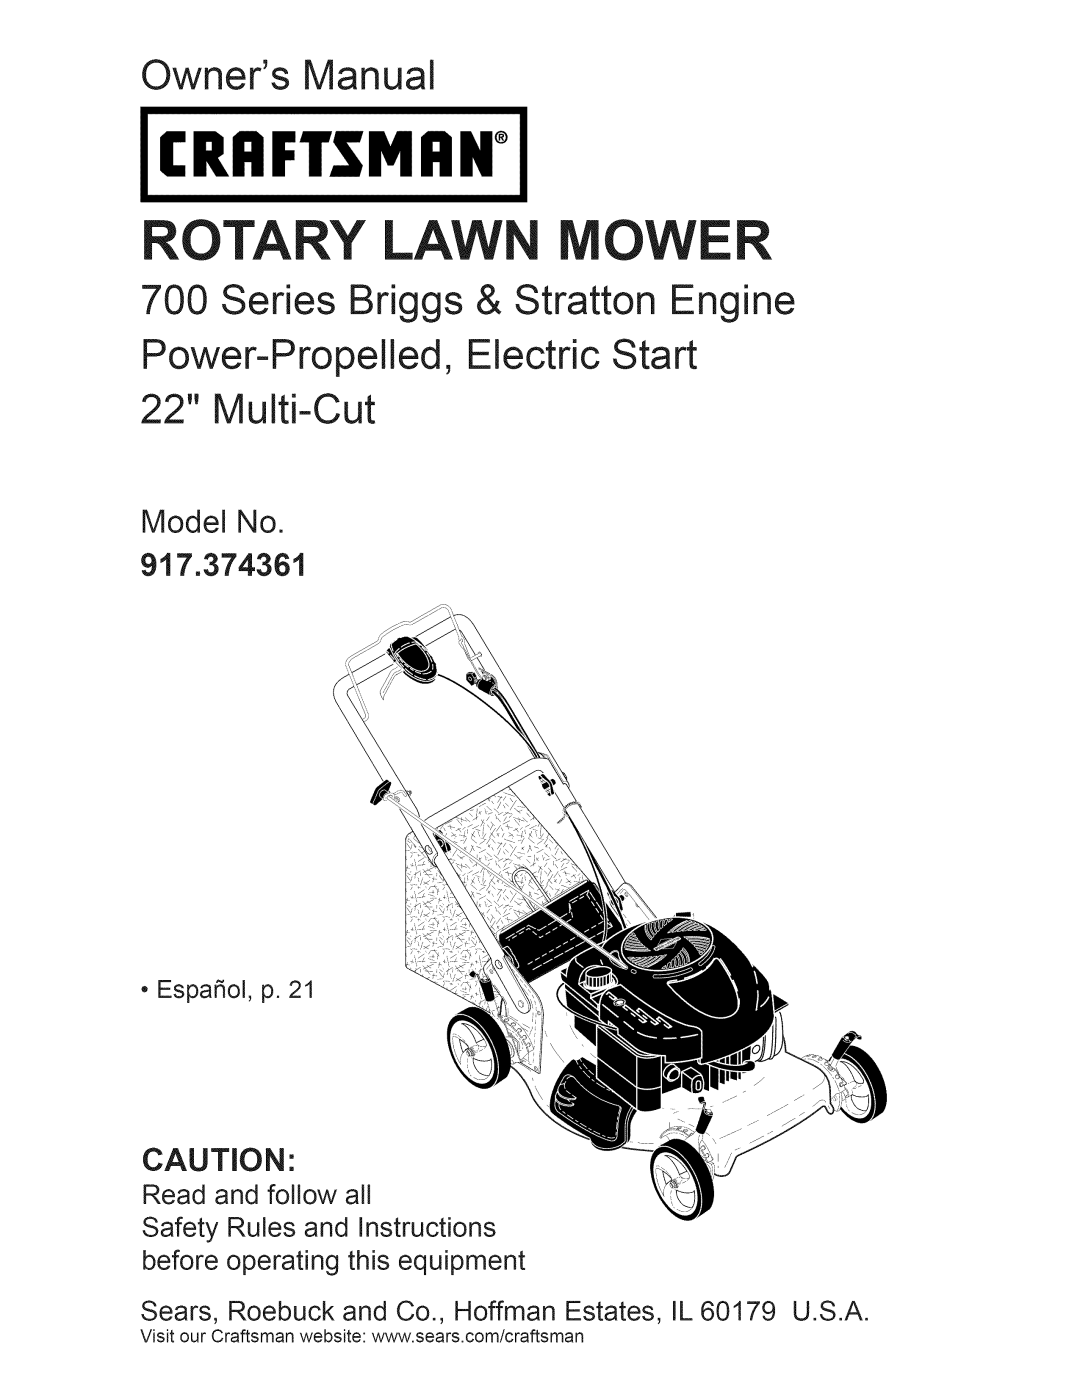 Craftsman owner manual Model No 917.374361, Craftsman, Rotary Lawn Mower, Owners Manual 